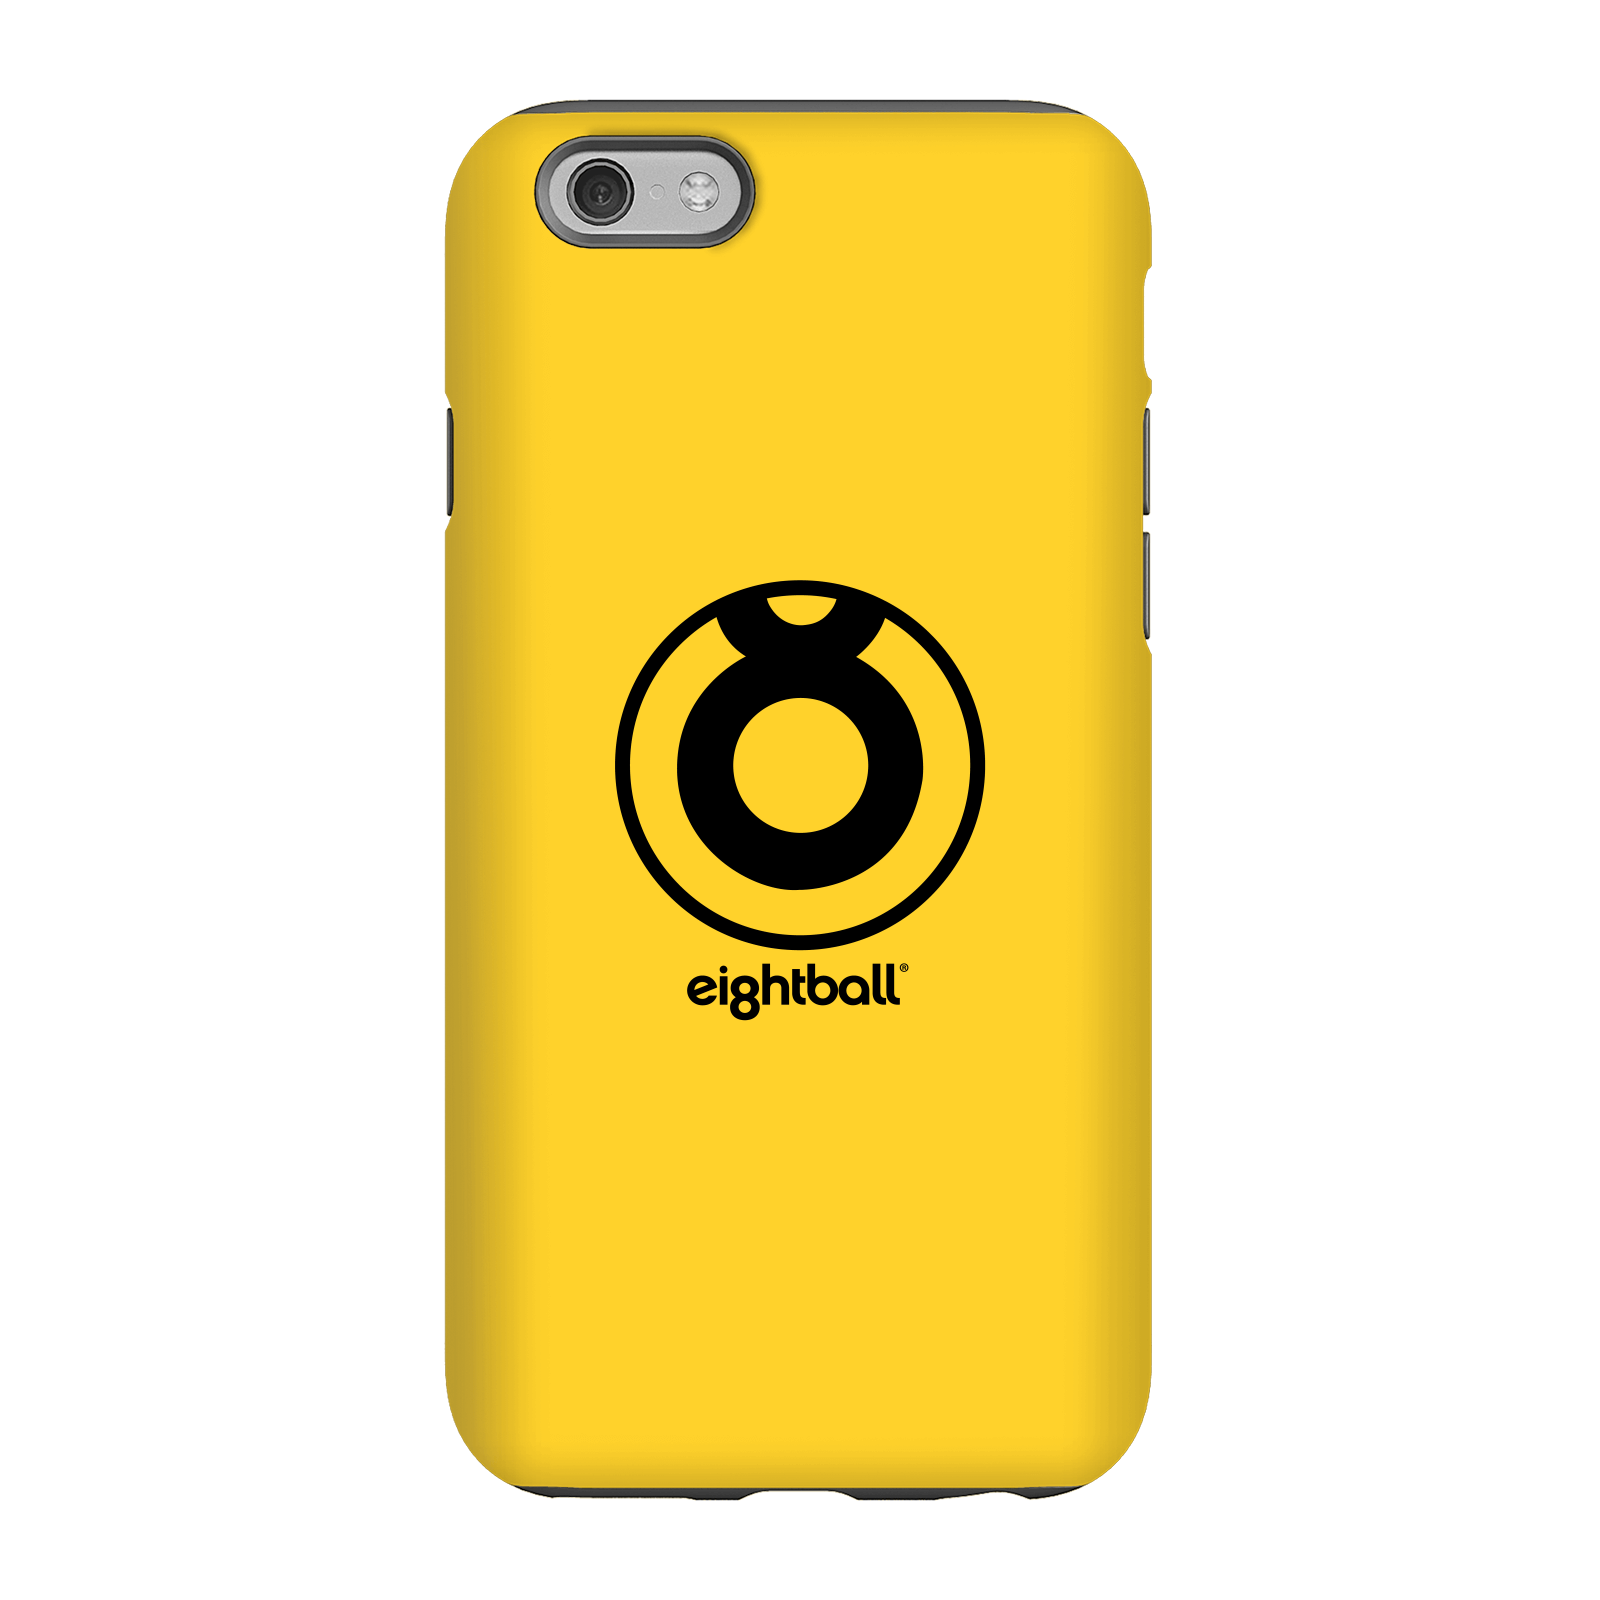 Funda Móvil Ei8htball Large Circle Logo para iPhone y Android - iPhone 6S - Carcasa doble capa - Mate